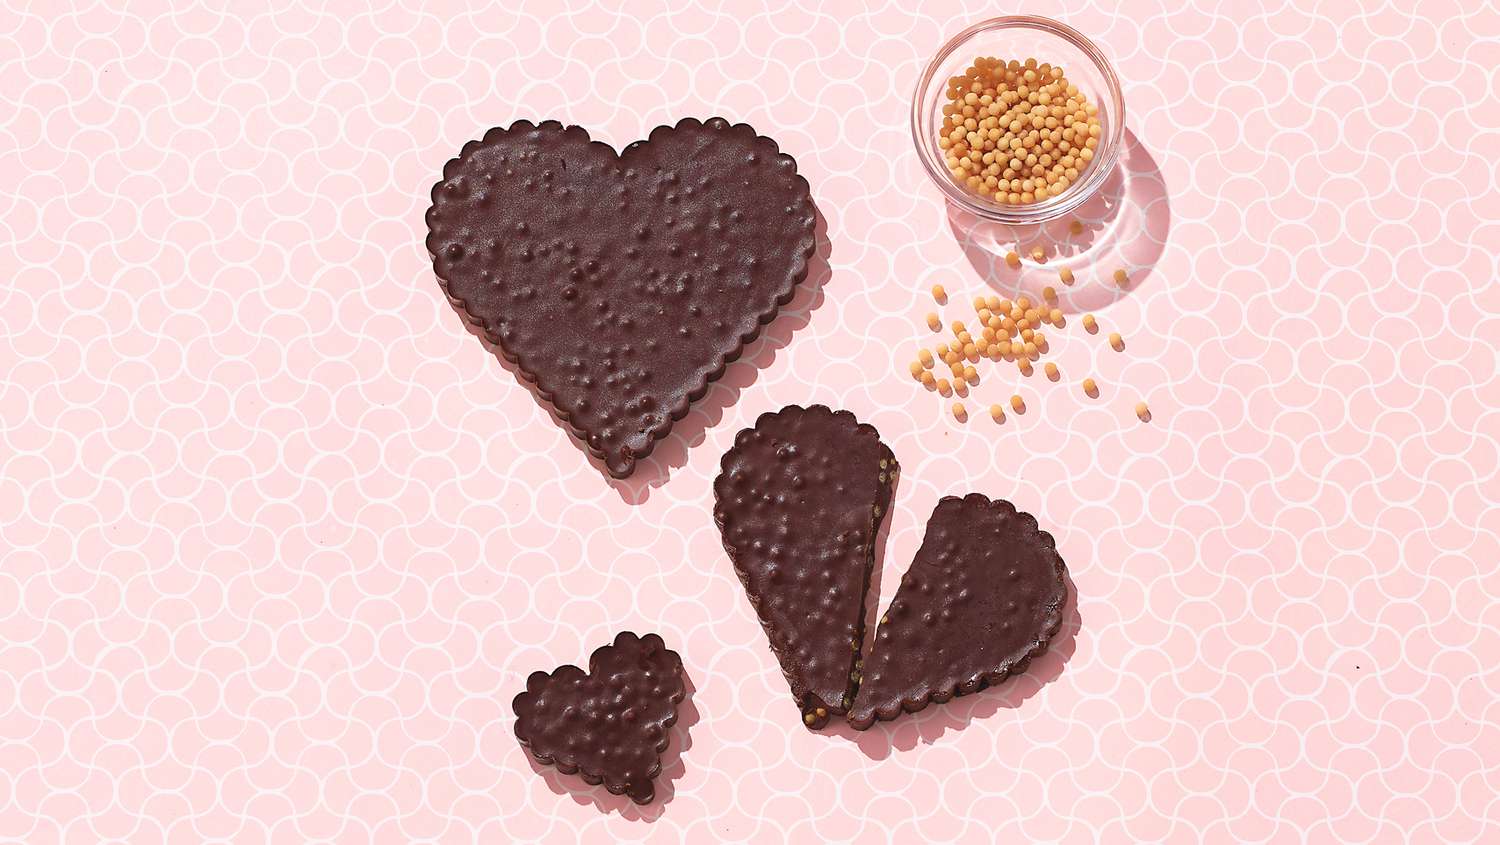 chocolate couscous valentines chocolate